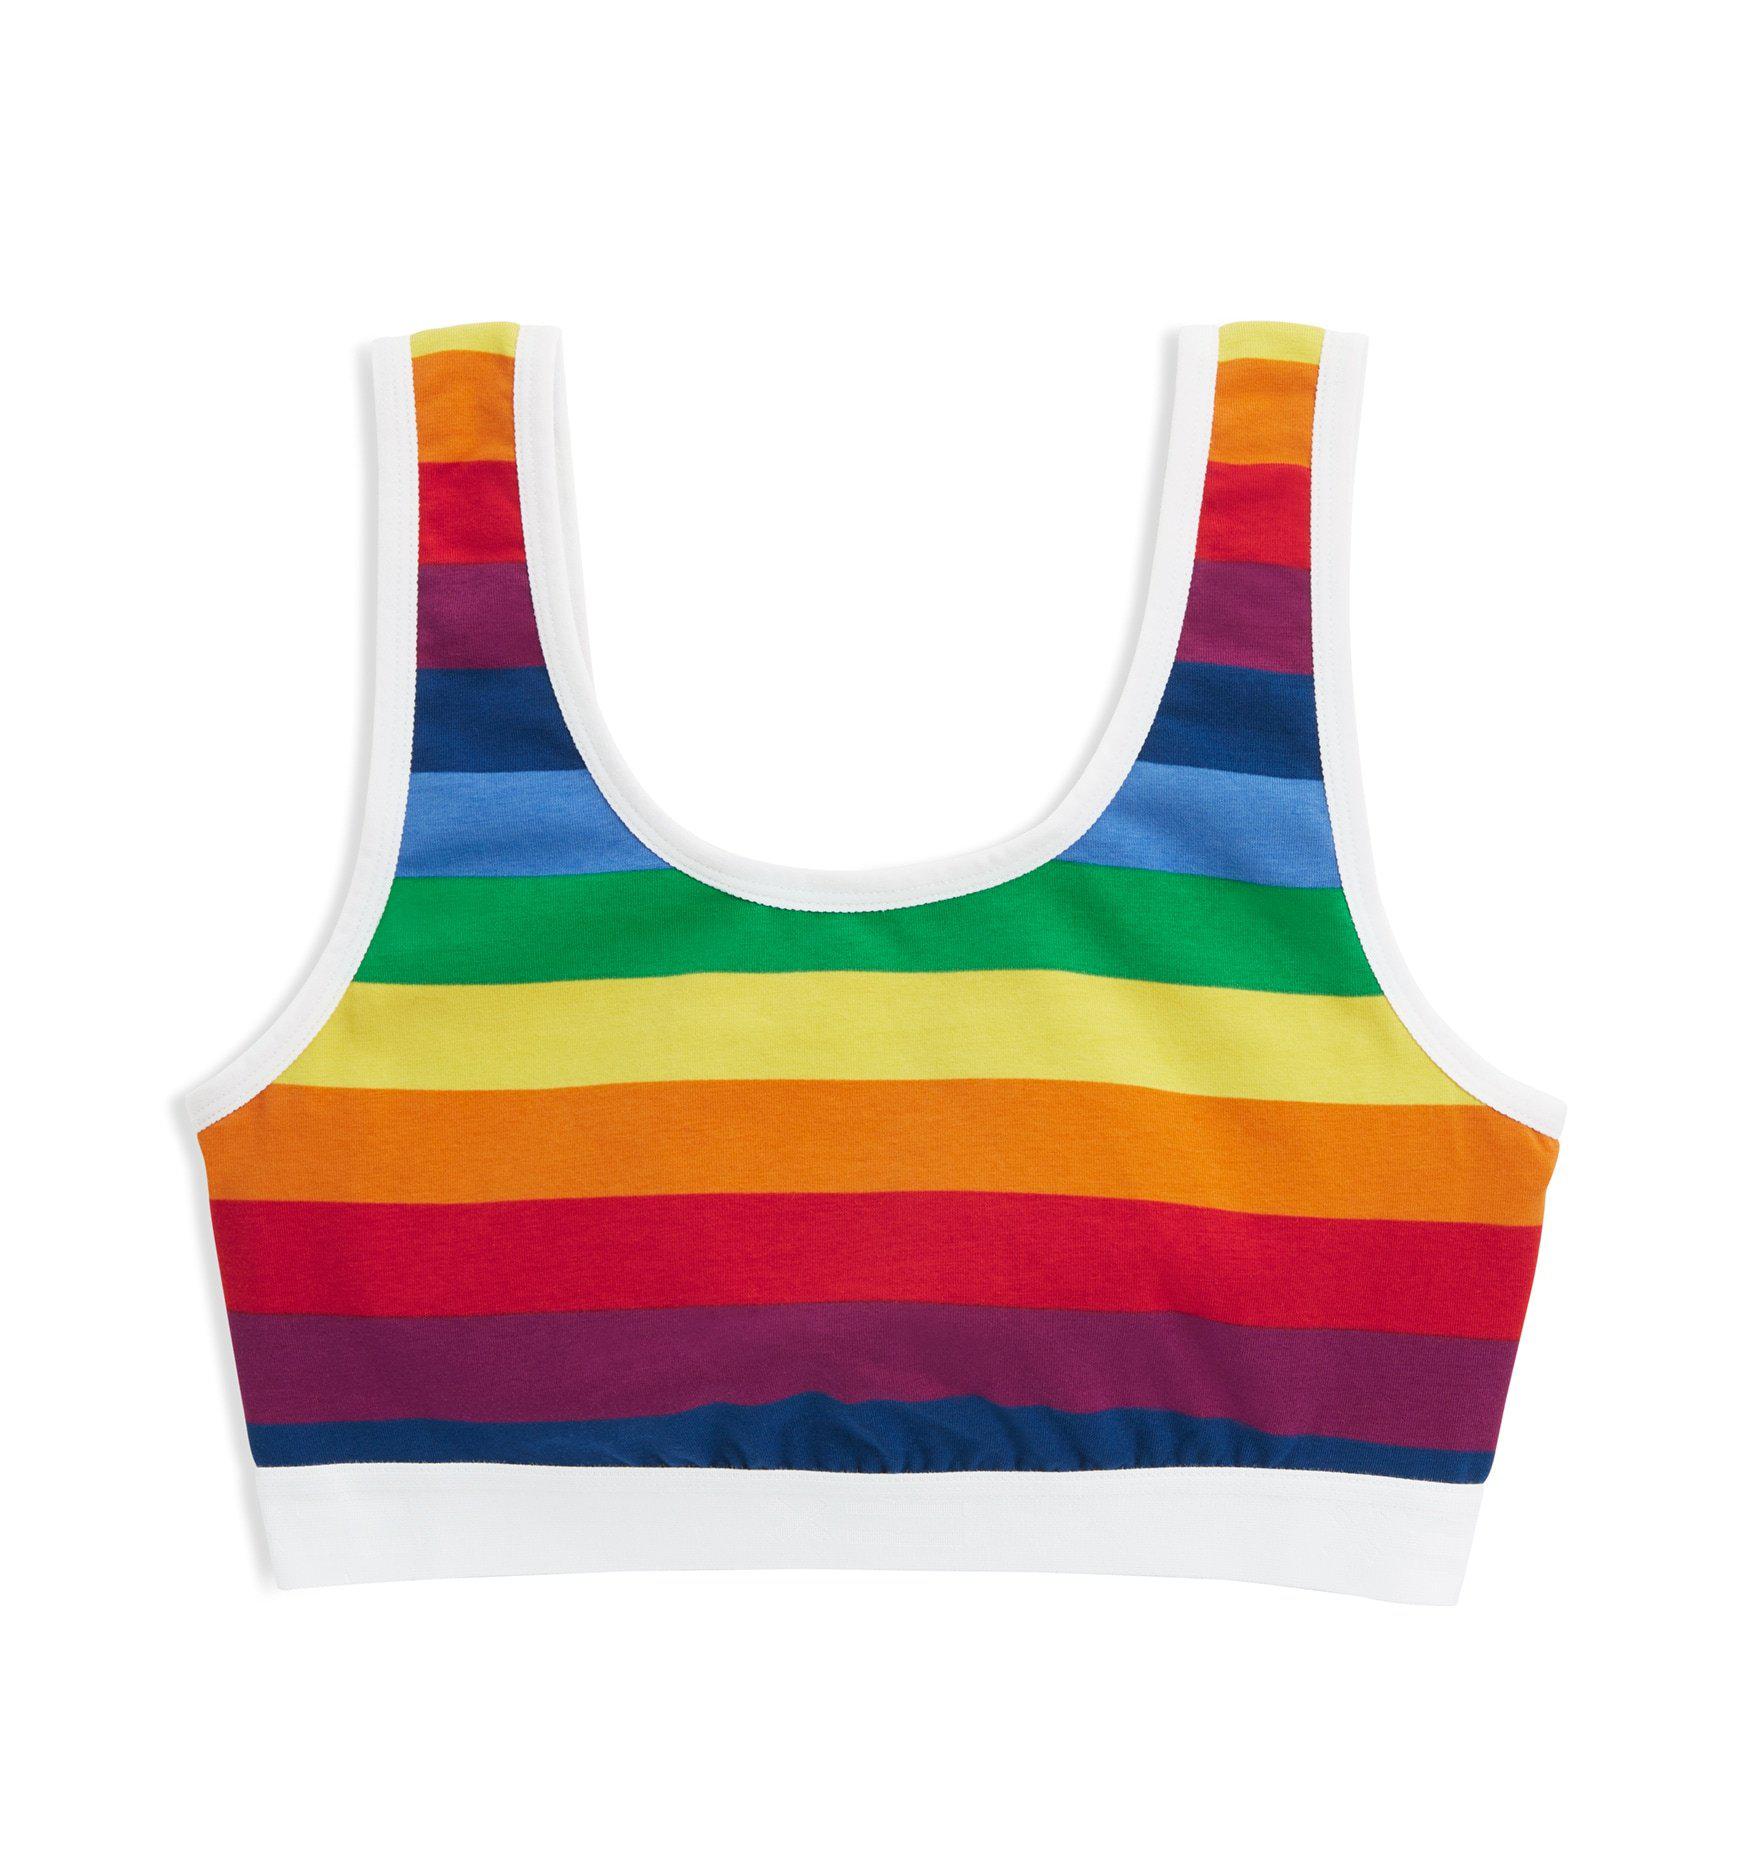 Essentials Soft Bra - Rainbow Pride Stripes